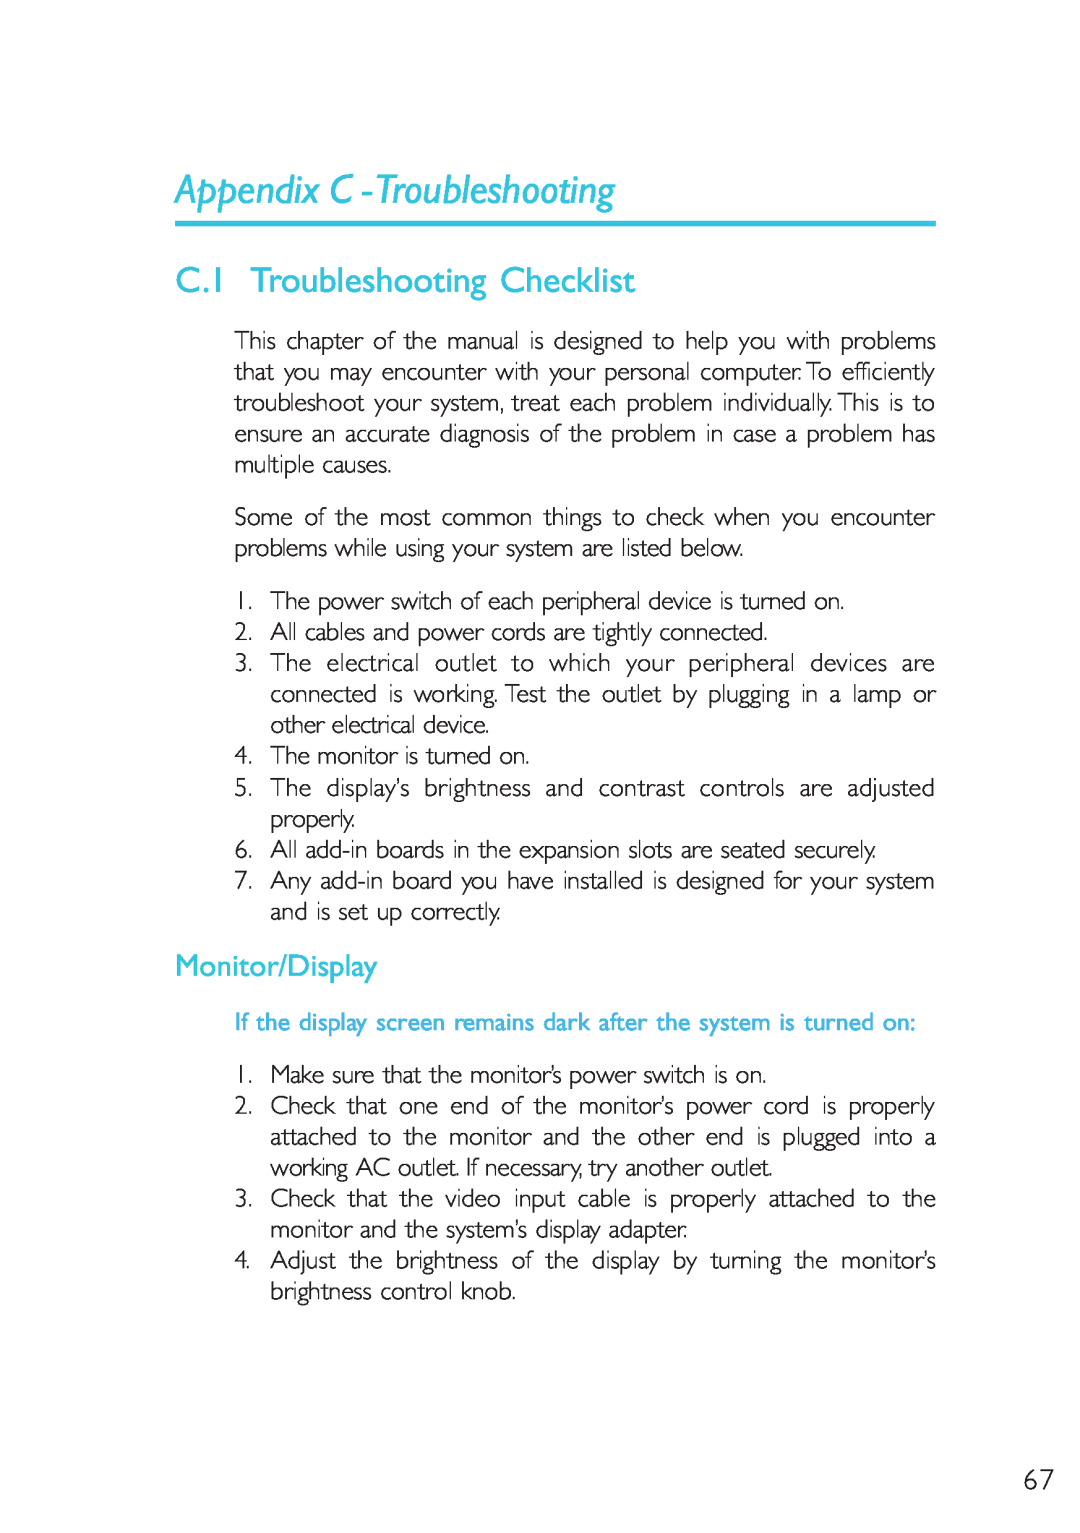 Microsoft G7VP2 manual Appendix C -Troubleshooting, C.1 Troubleshooting Checklist, Monitor/Display 